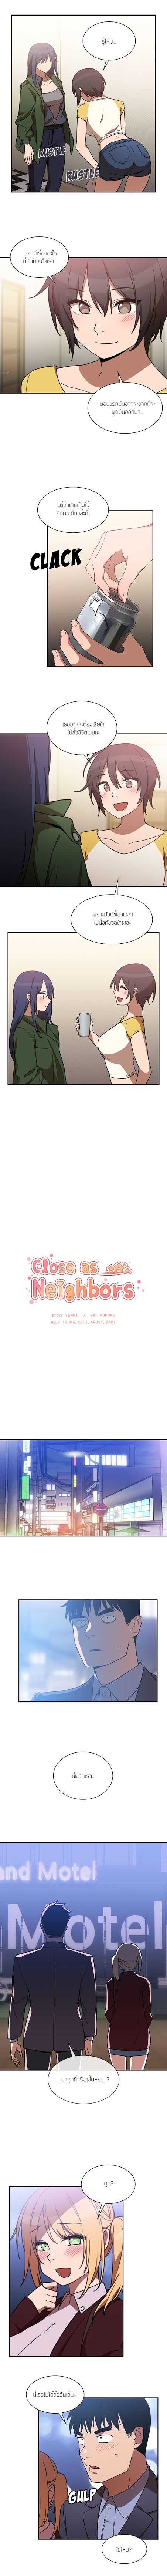 à¸­à¹ˆà¸²à¸™ Close as Neighbors